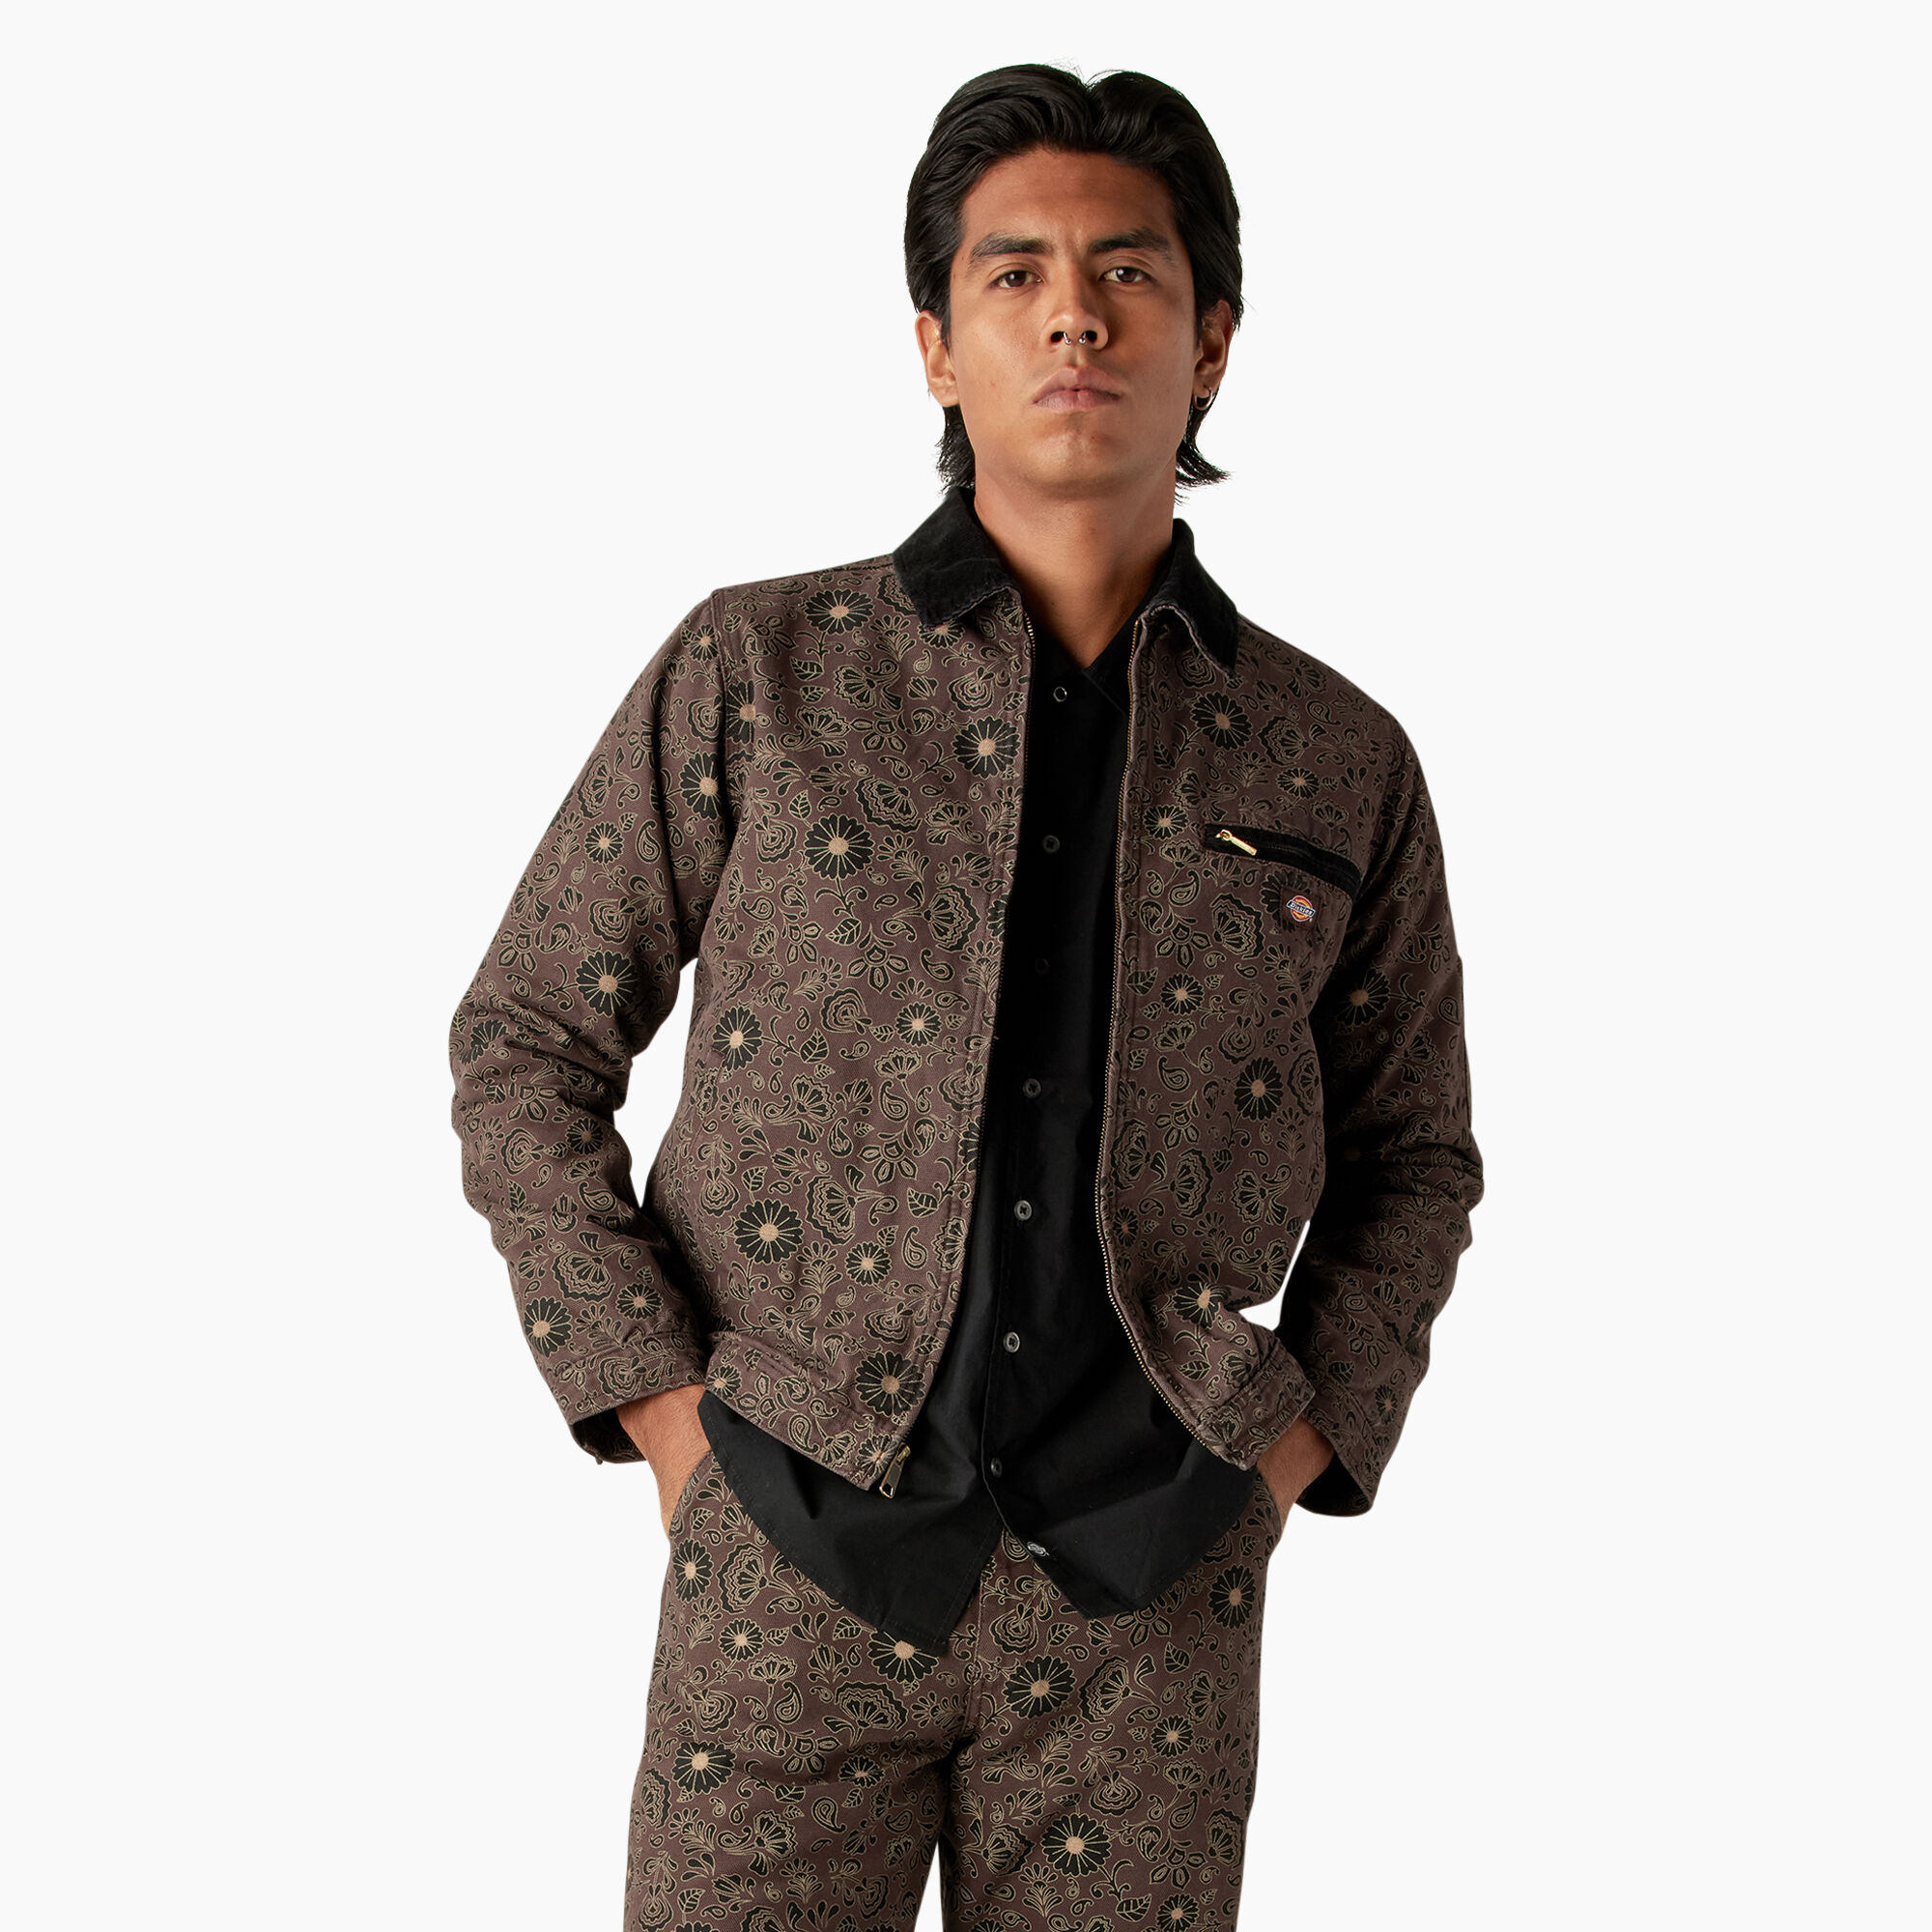 Men's Coats & Jackets – Durable Workwear | Dickies | Dickies US